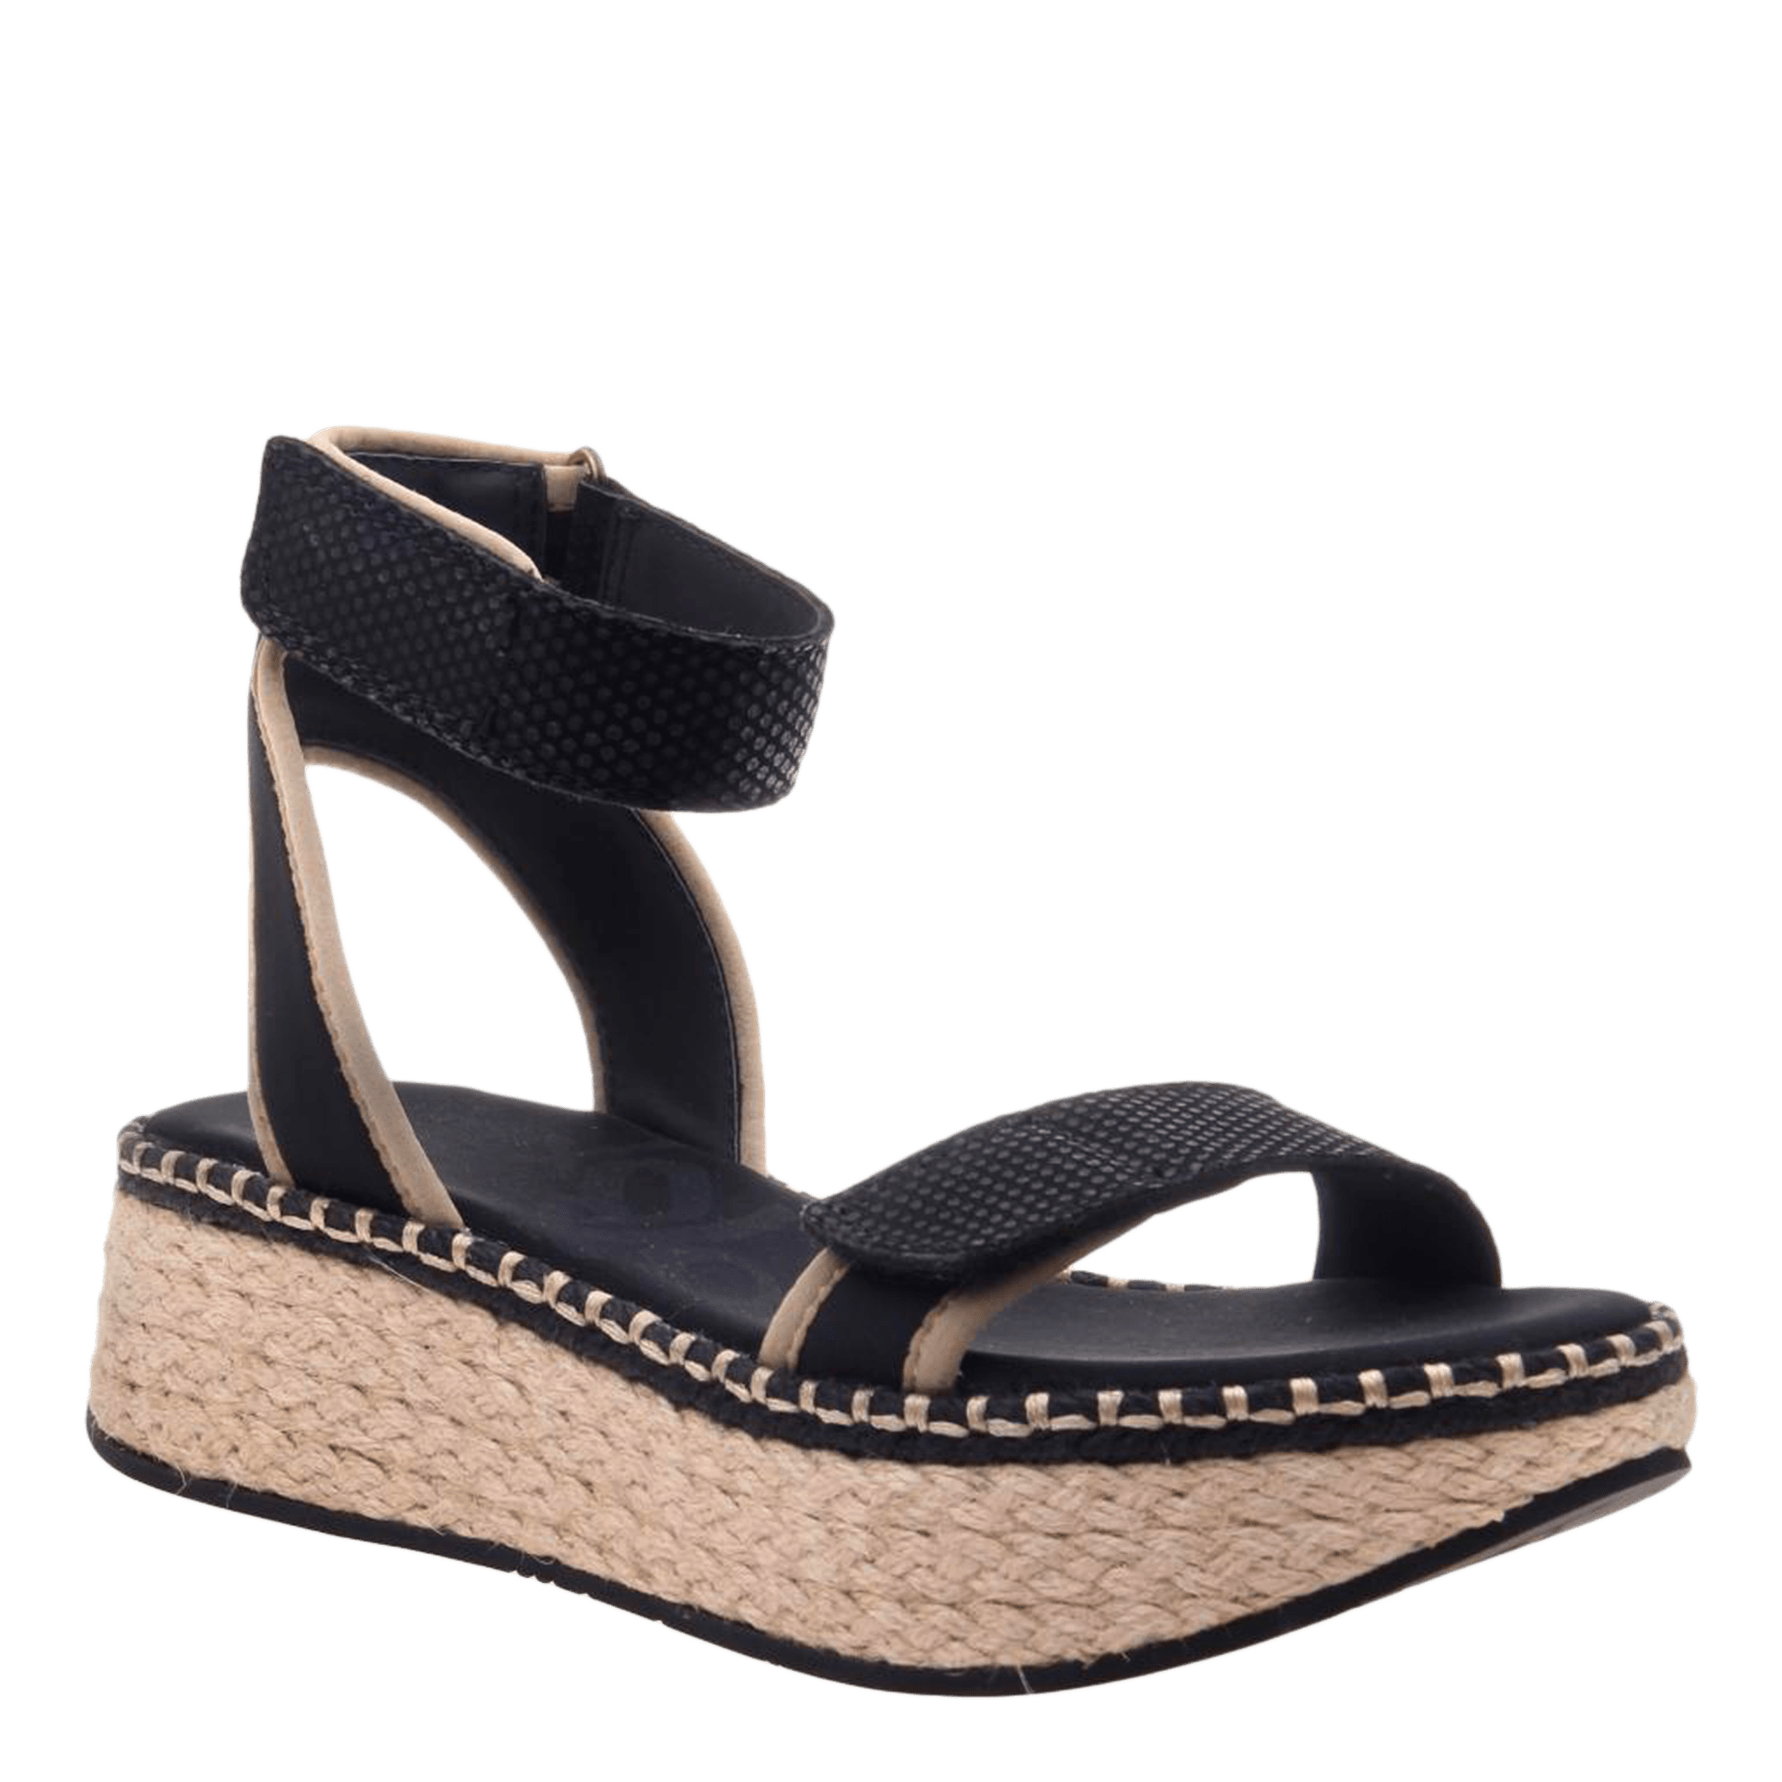 women's black platform sandals